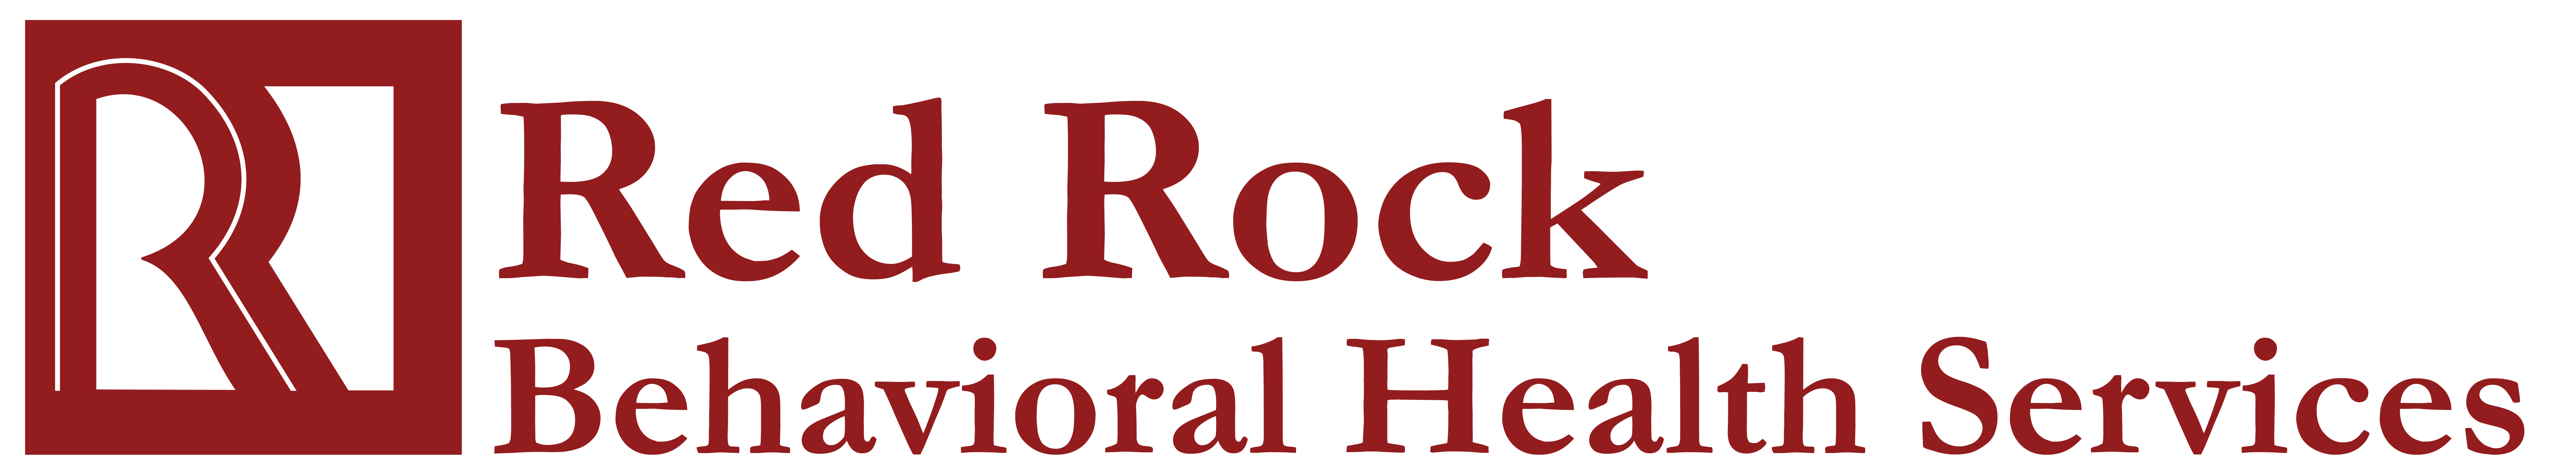 Red Rock Behavioral Health Services logo